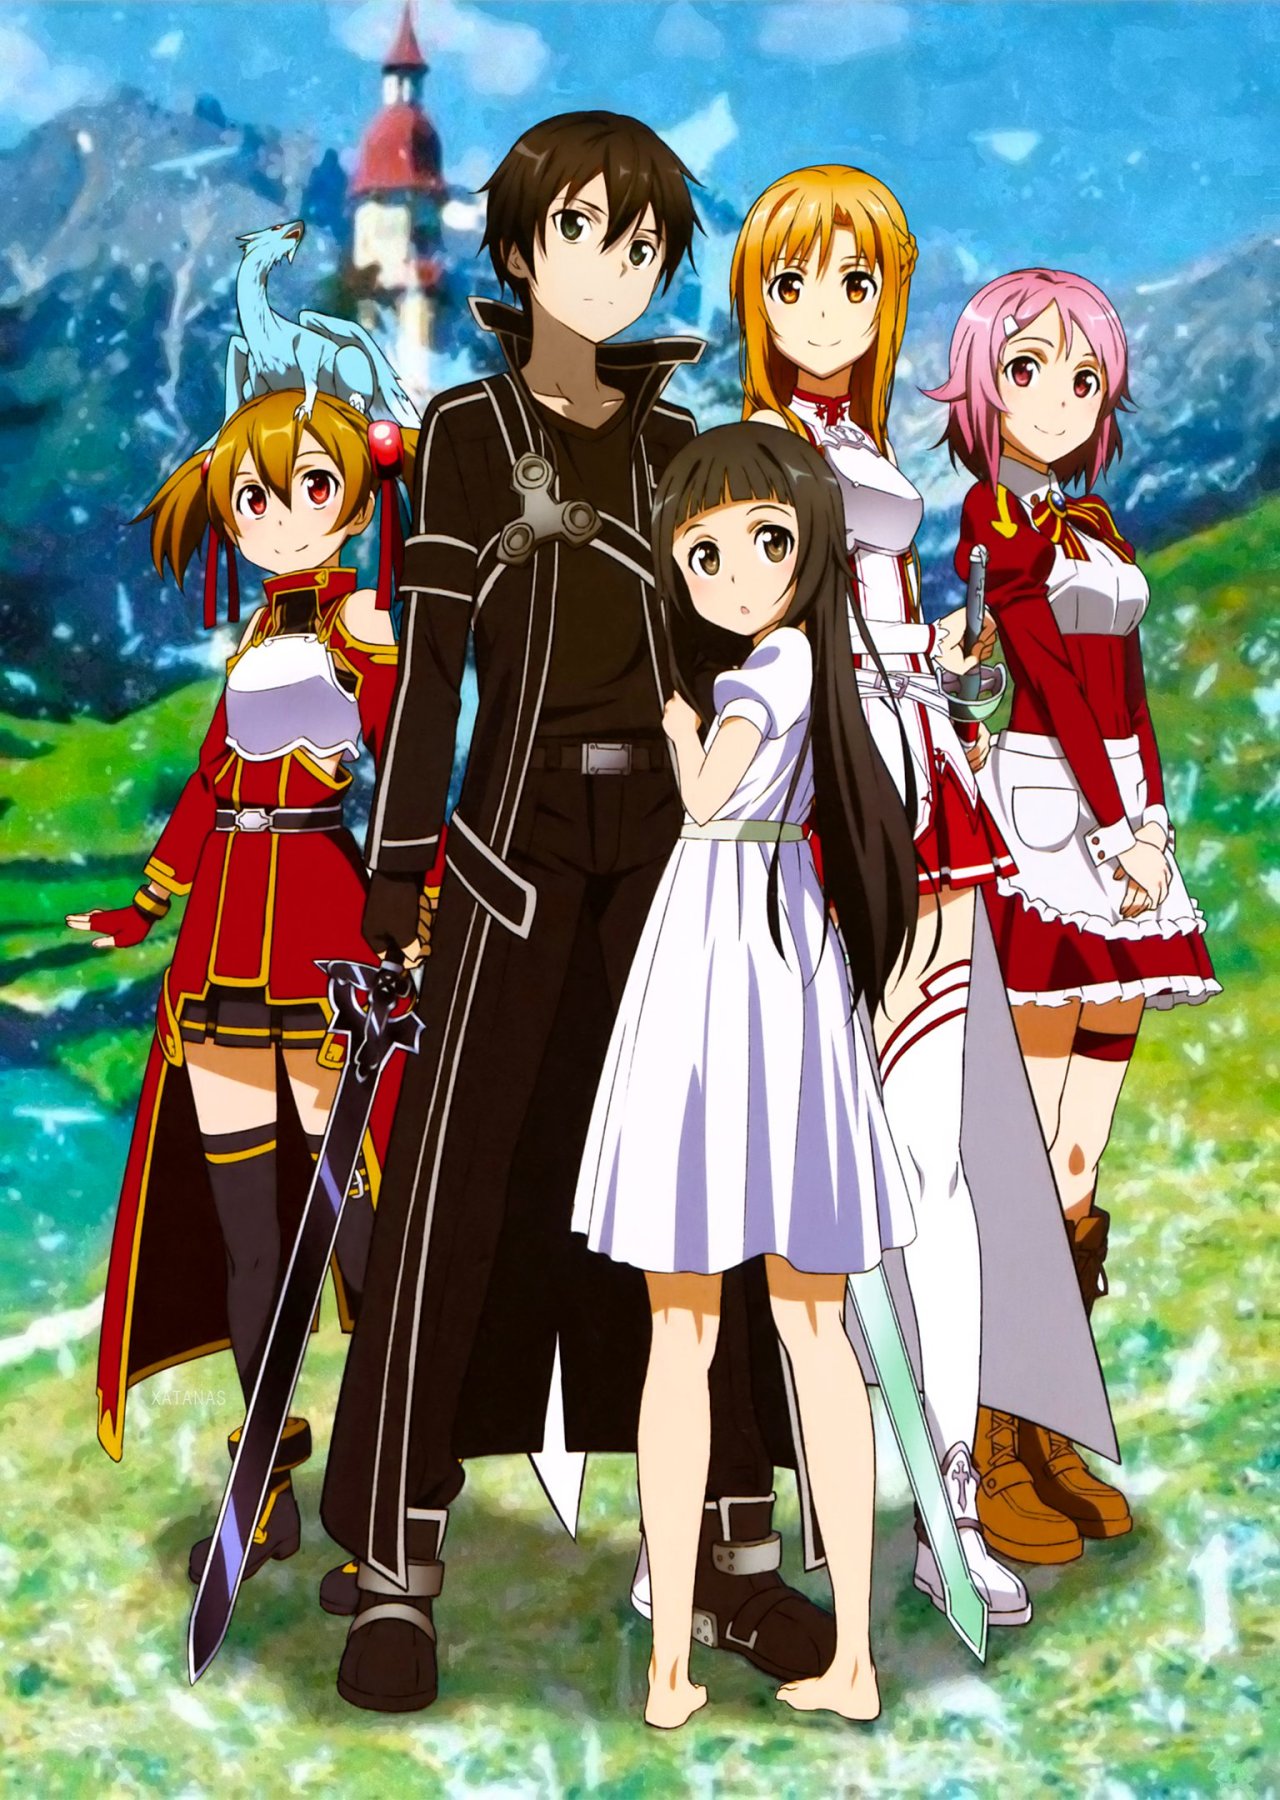 Hình nền  Anime Sword Art Online Alicization Kirito Sword Art Online  Kirigaya Kazuto Alice Sword Art Online Alicization Yuuki Asuna Hiển thị  chân dung thanh kiếm 1080x1920  Jeadgher  1669355 